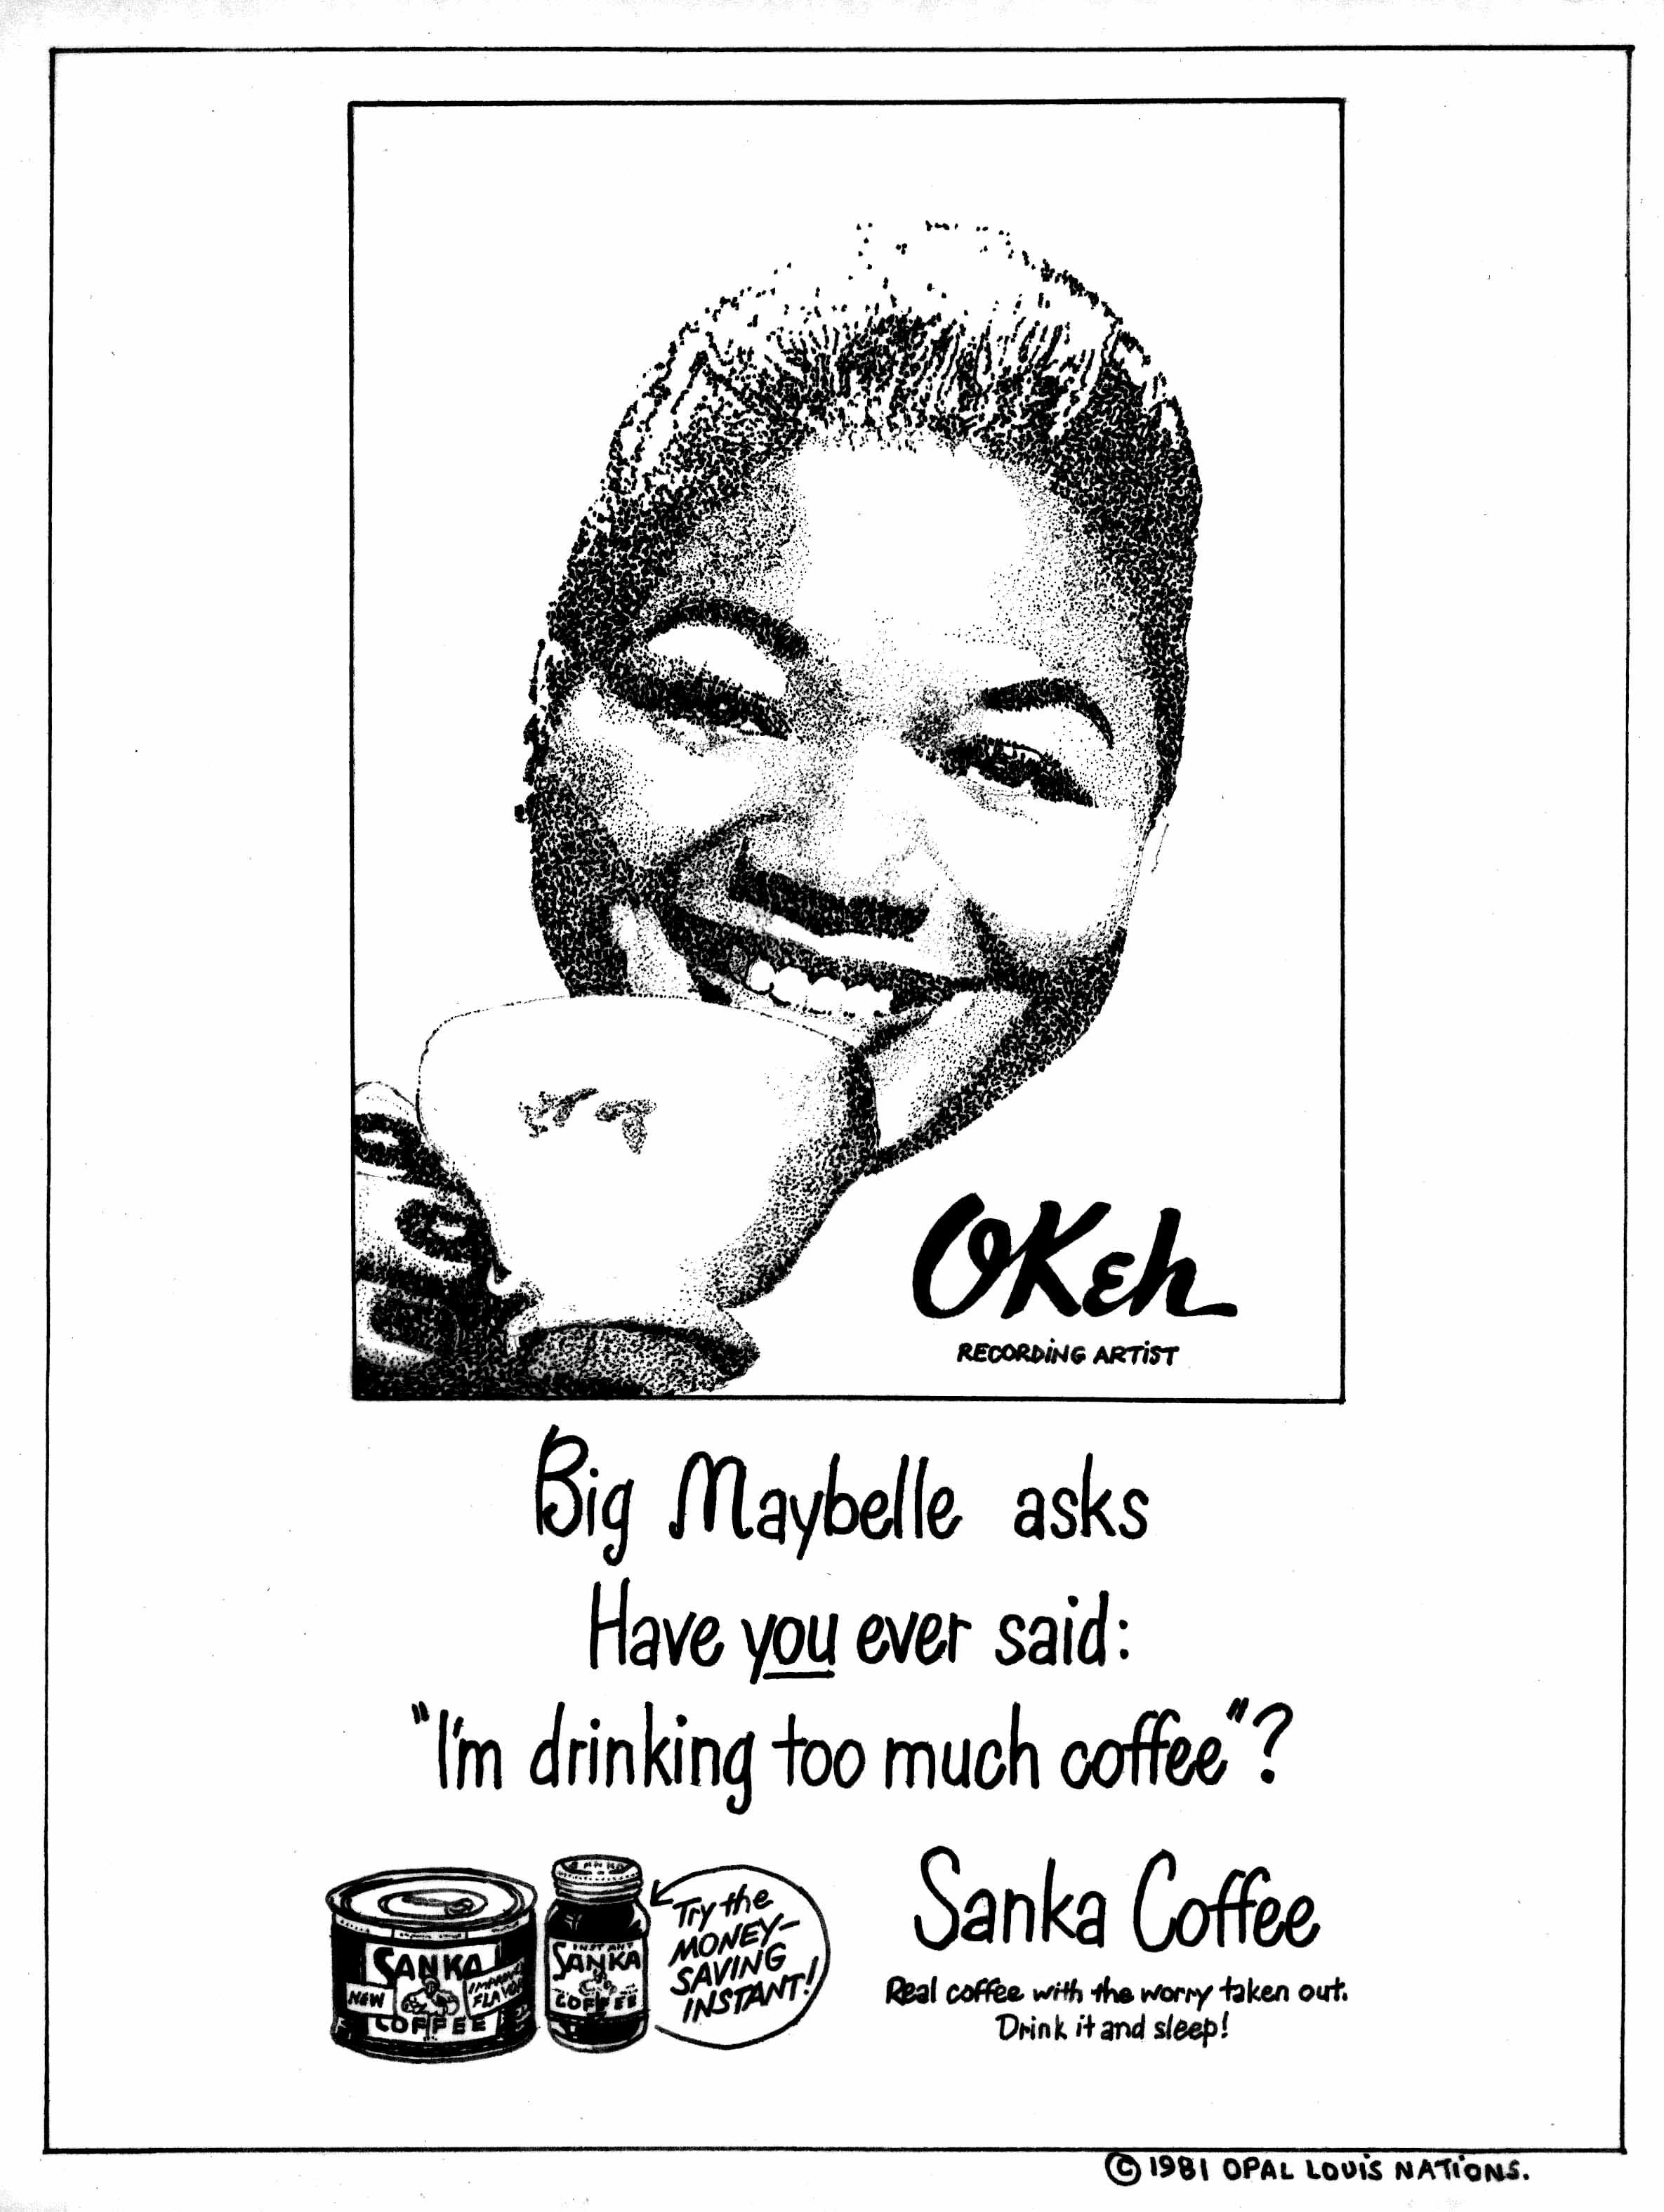 Big Maybelle-Sanka Coffee